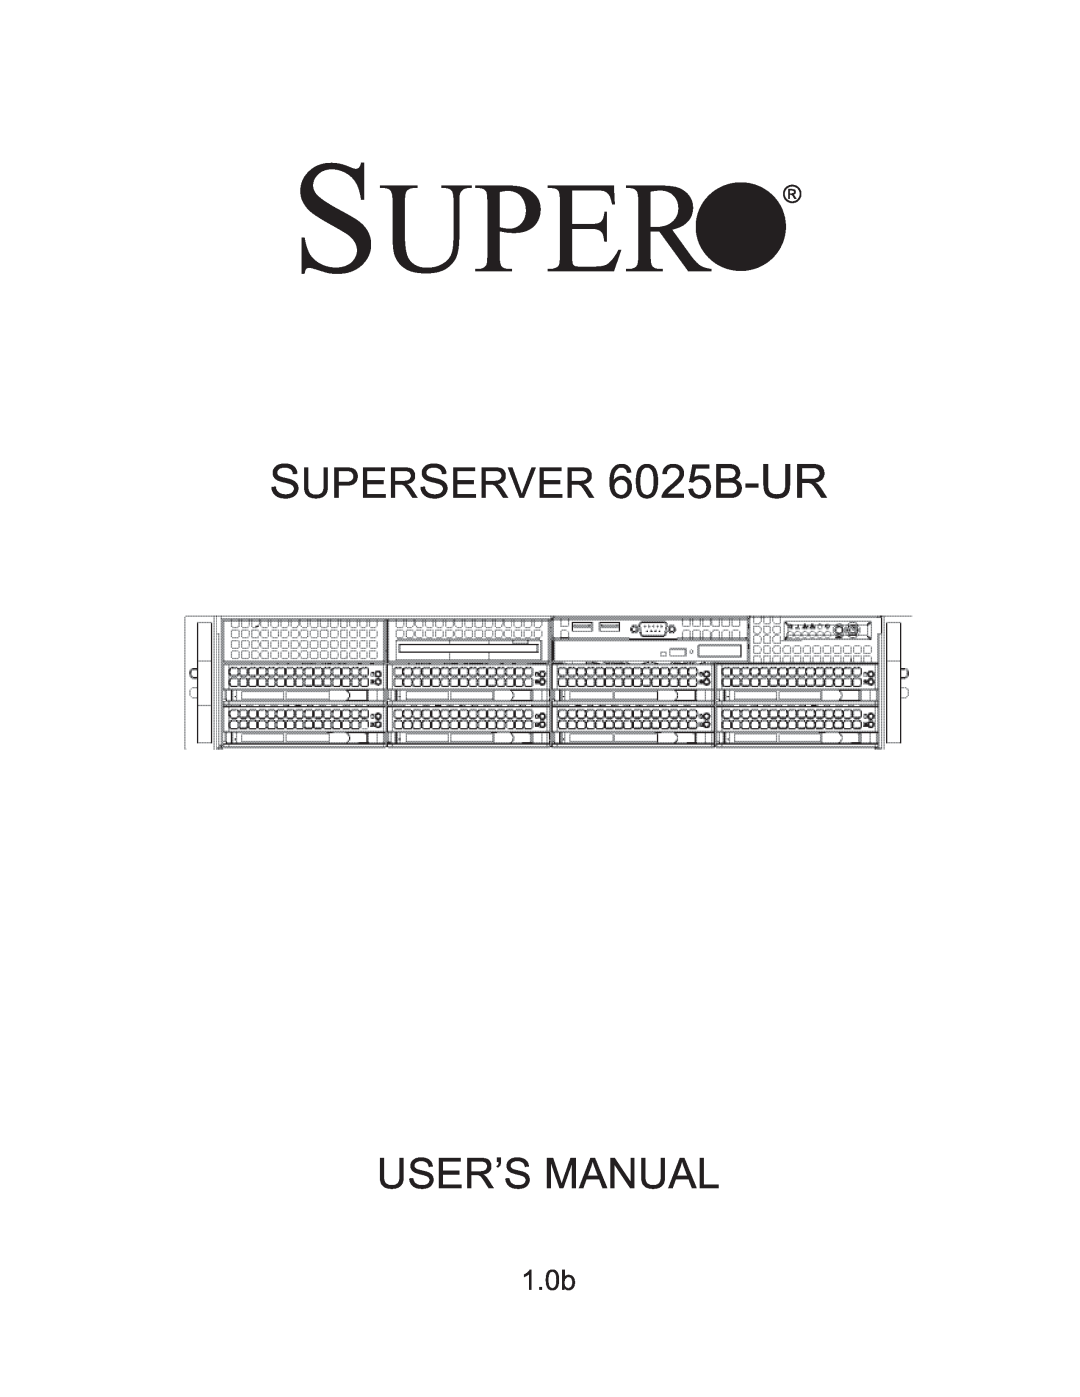 SUPER MICRO Computer user manual 1.0b, Super, SUPERSERVER 6025B-UR, User’S Manual 